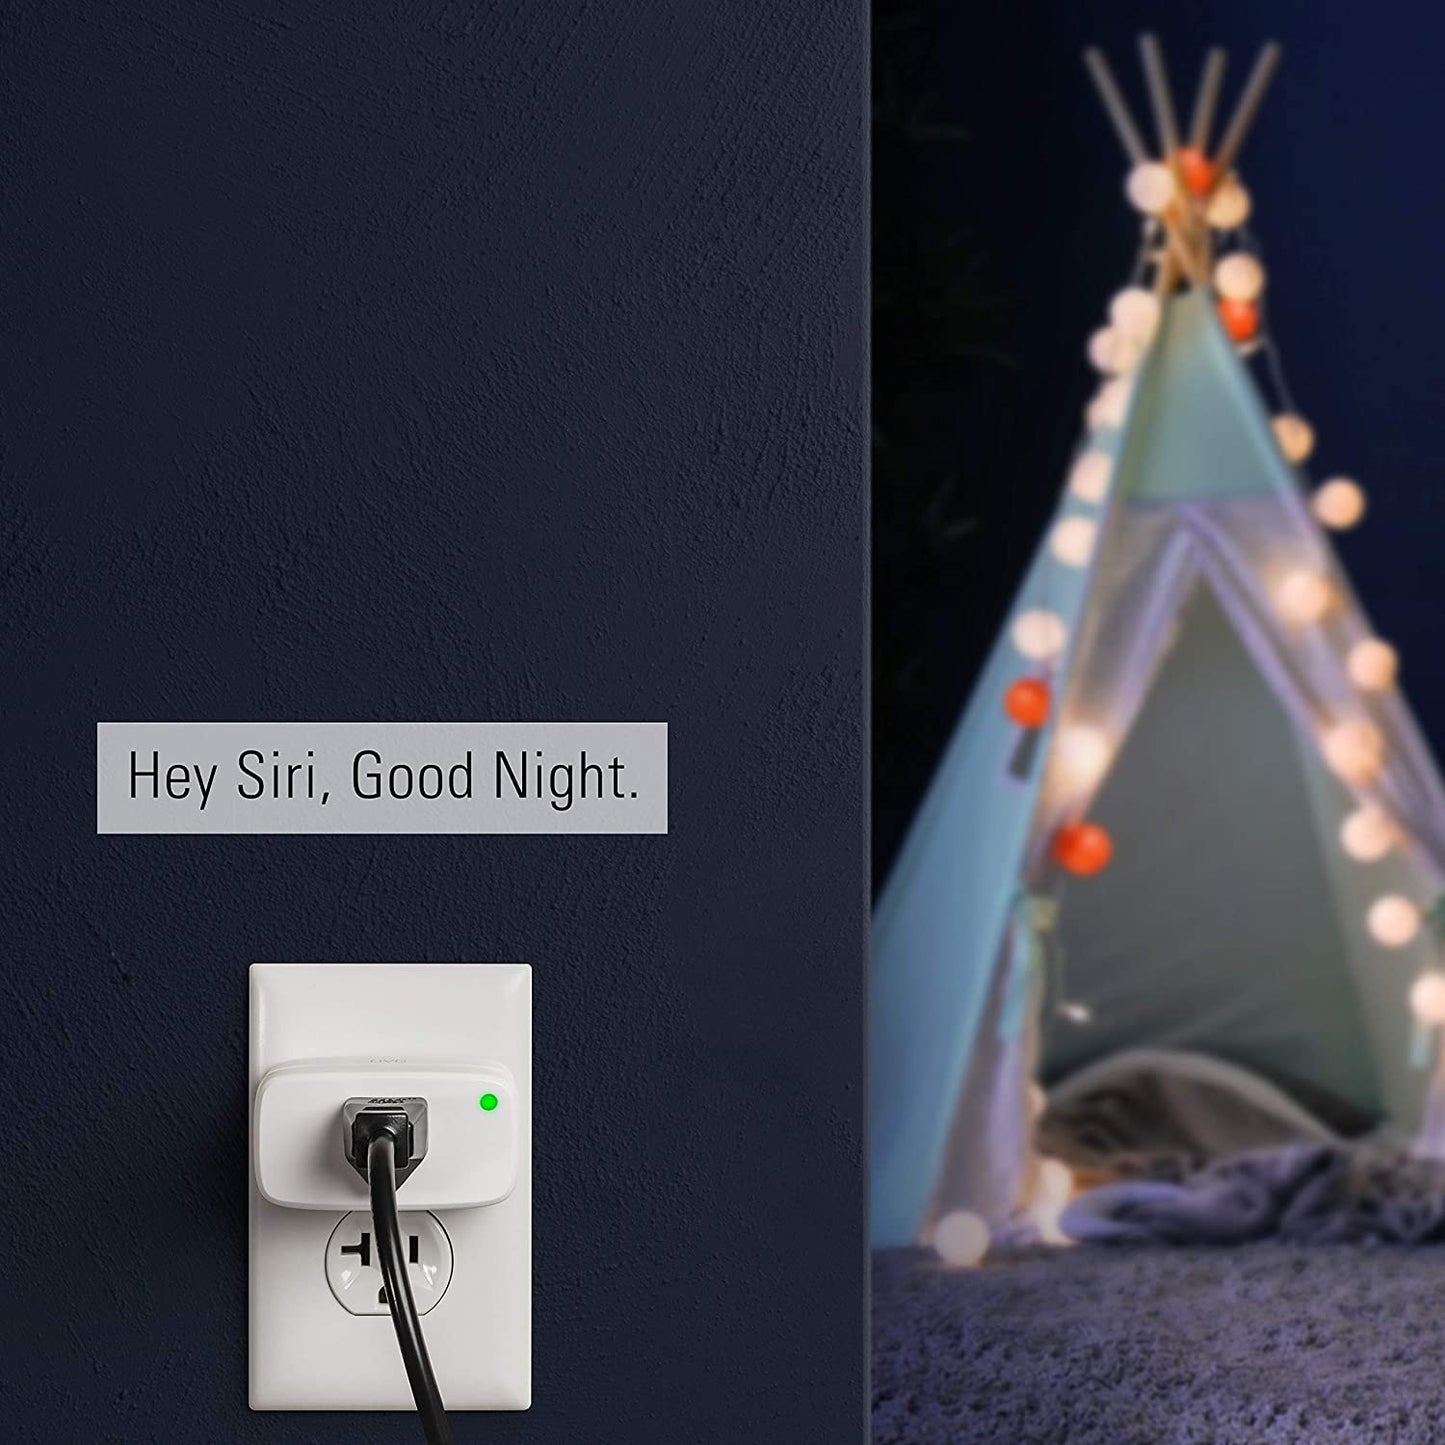 Eve Energy - Smart Plug & Power Meter - Apple HomeKit Compatible